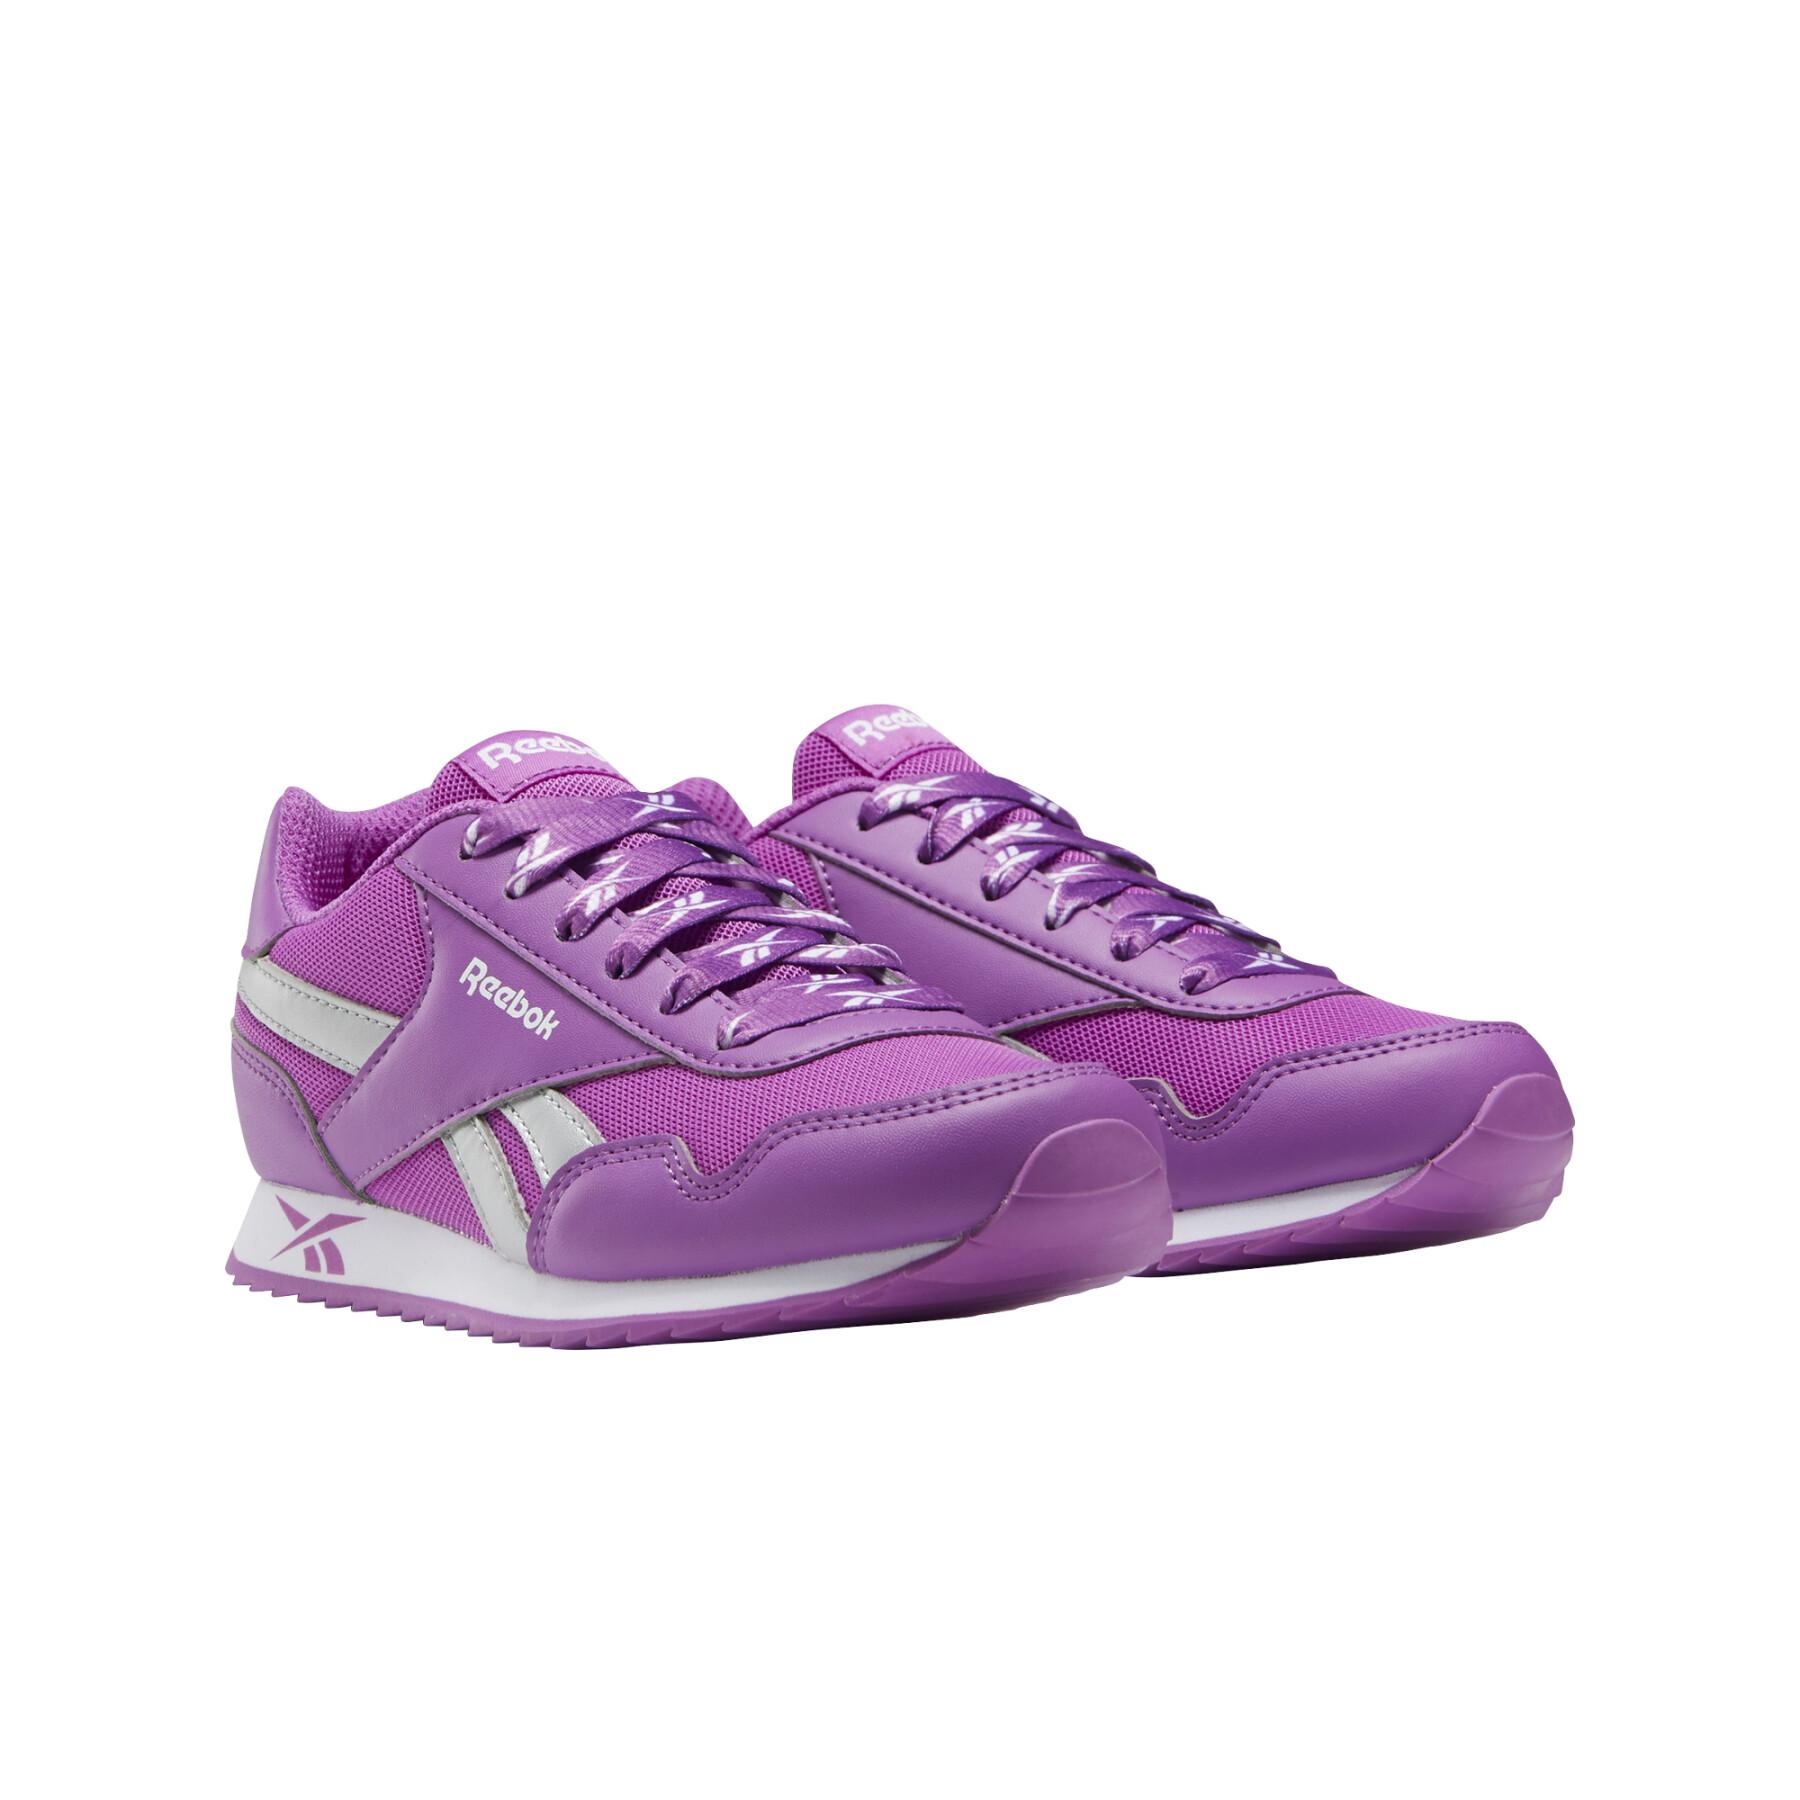 Schuhe für Mädchen Reebok Royal Jogger 3